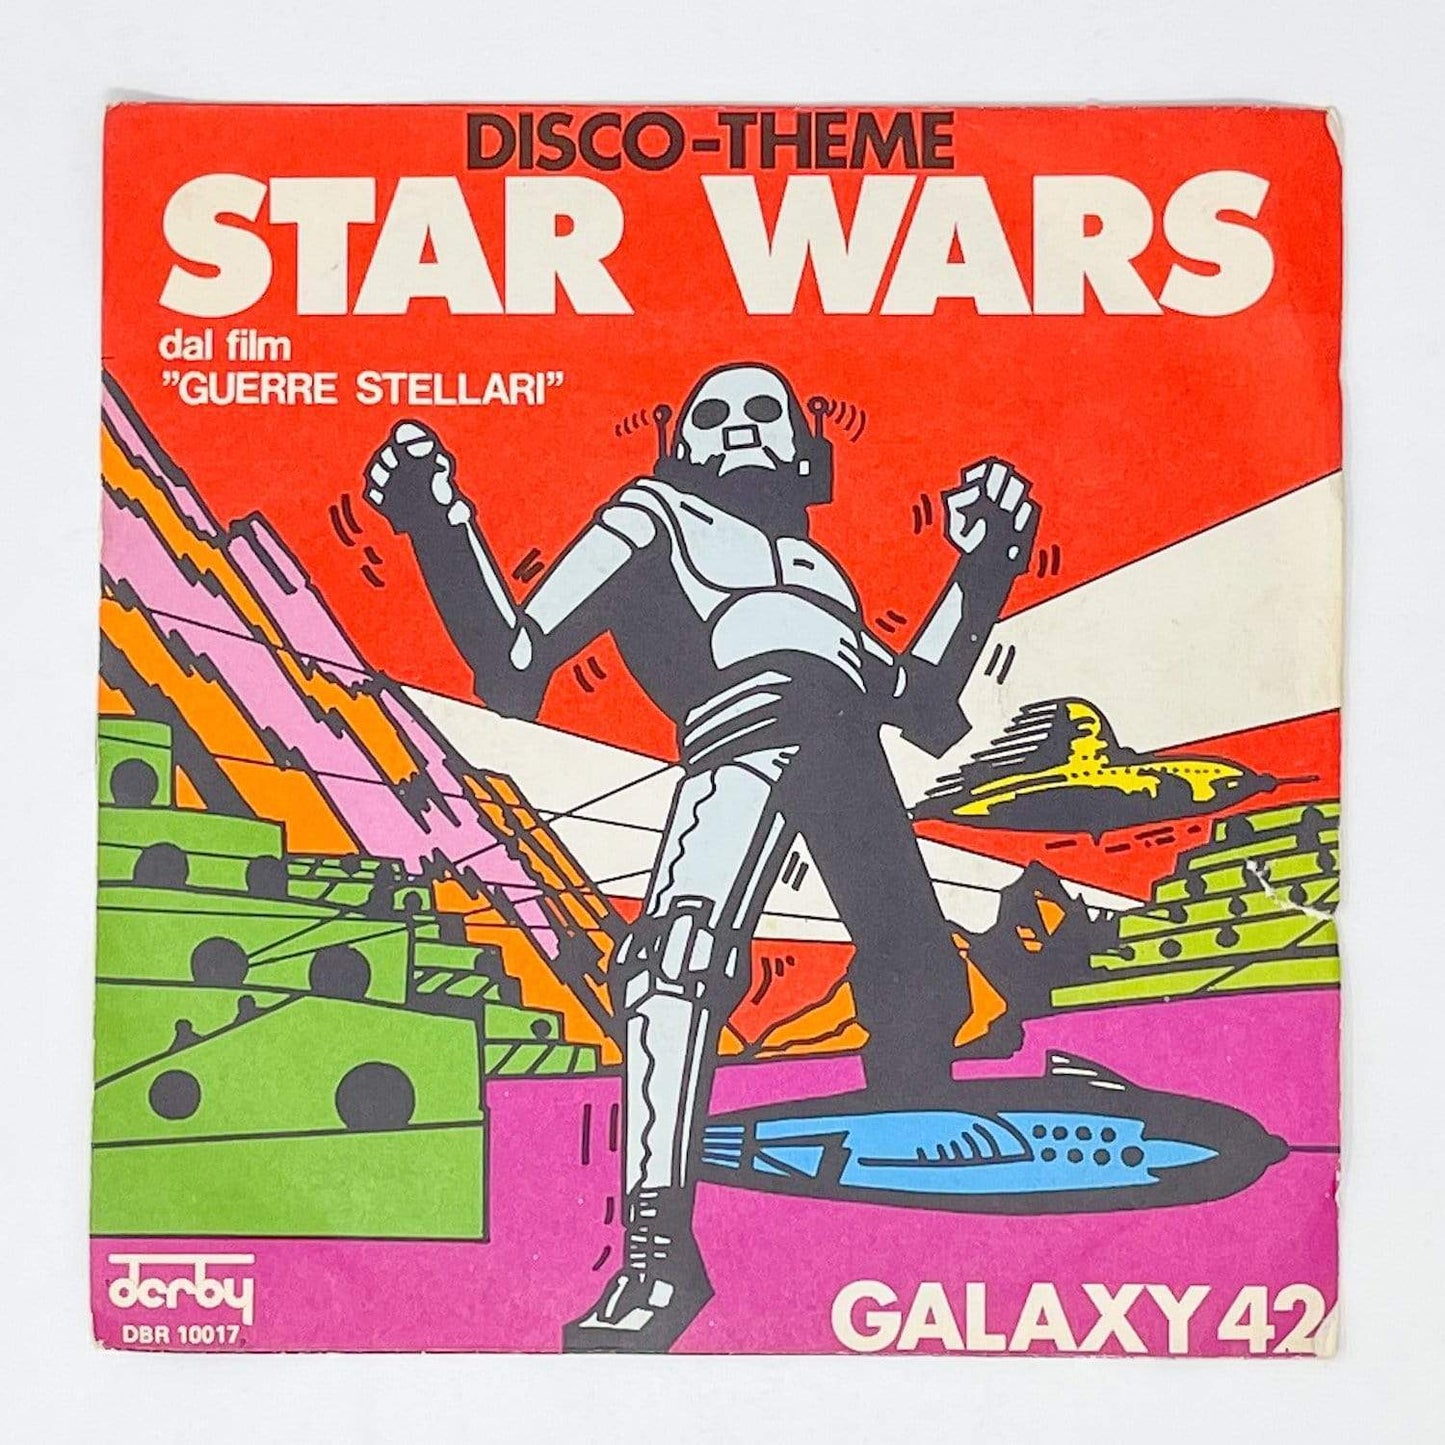 Vintage Foreign Vinyl Star Wars Non-Toy Star Wars Disco Theme 7" Record - Galaxy 42 - Italy (1977)